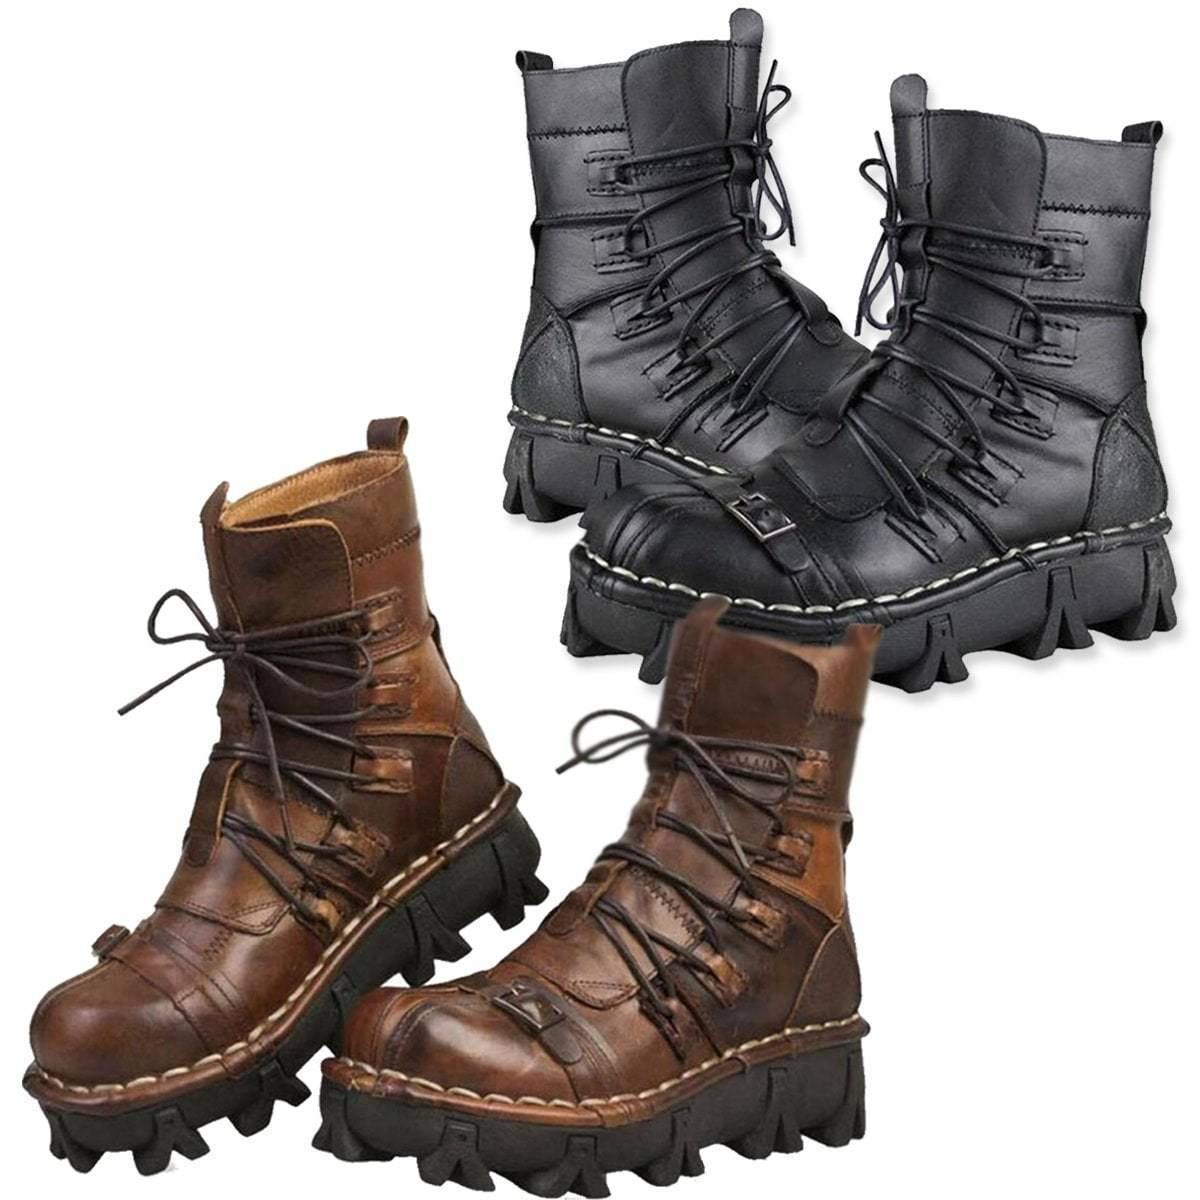 Badass Handmade Leather Boots, Size US 7-13.5, Brown, Black - American Legend Rider